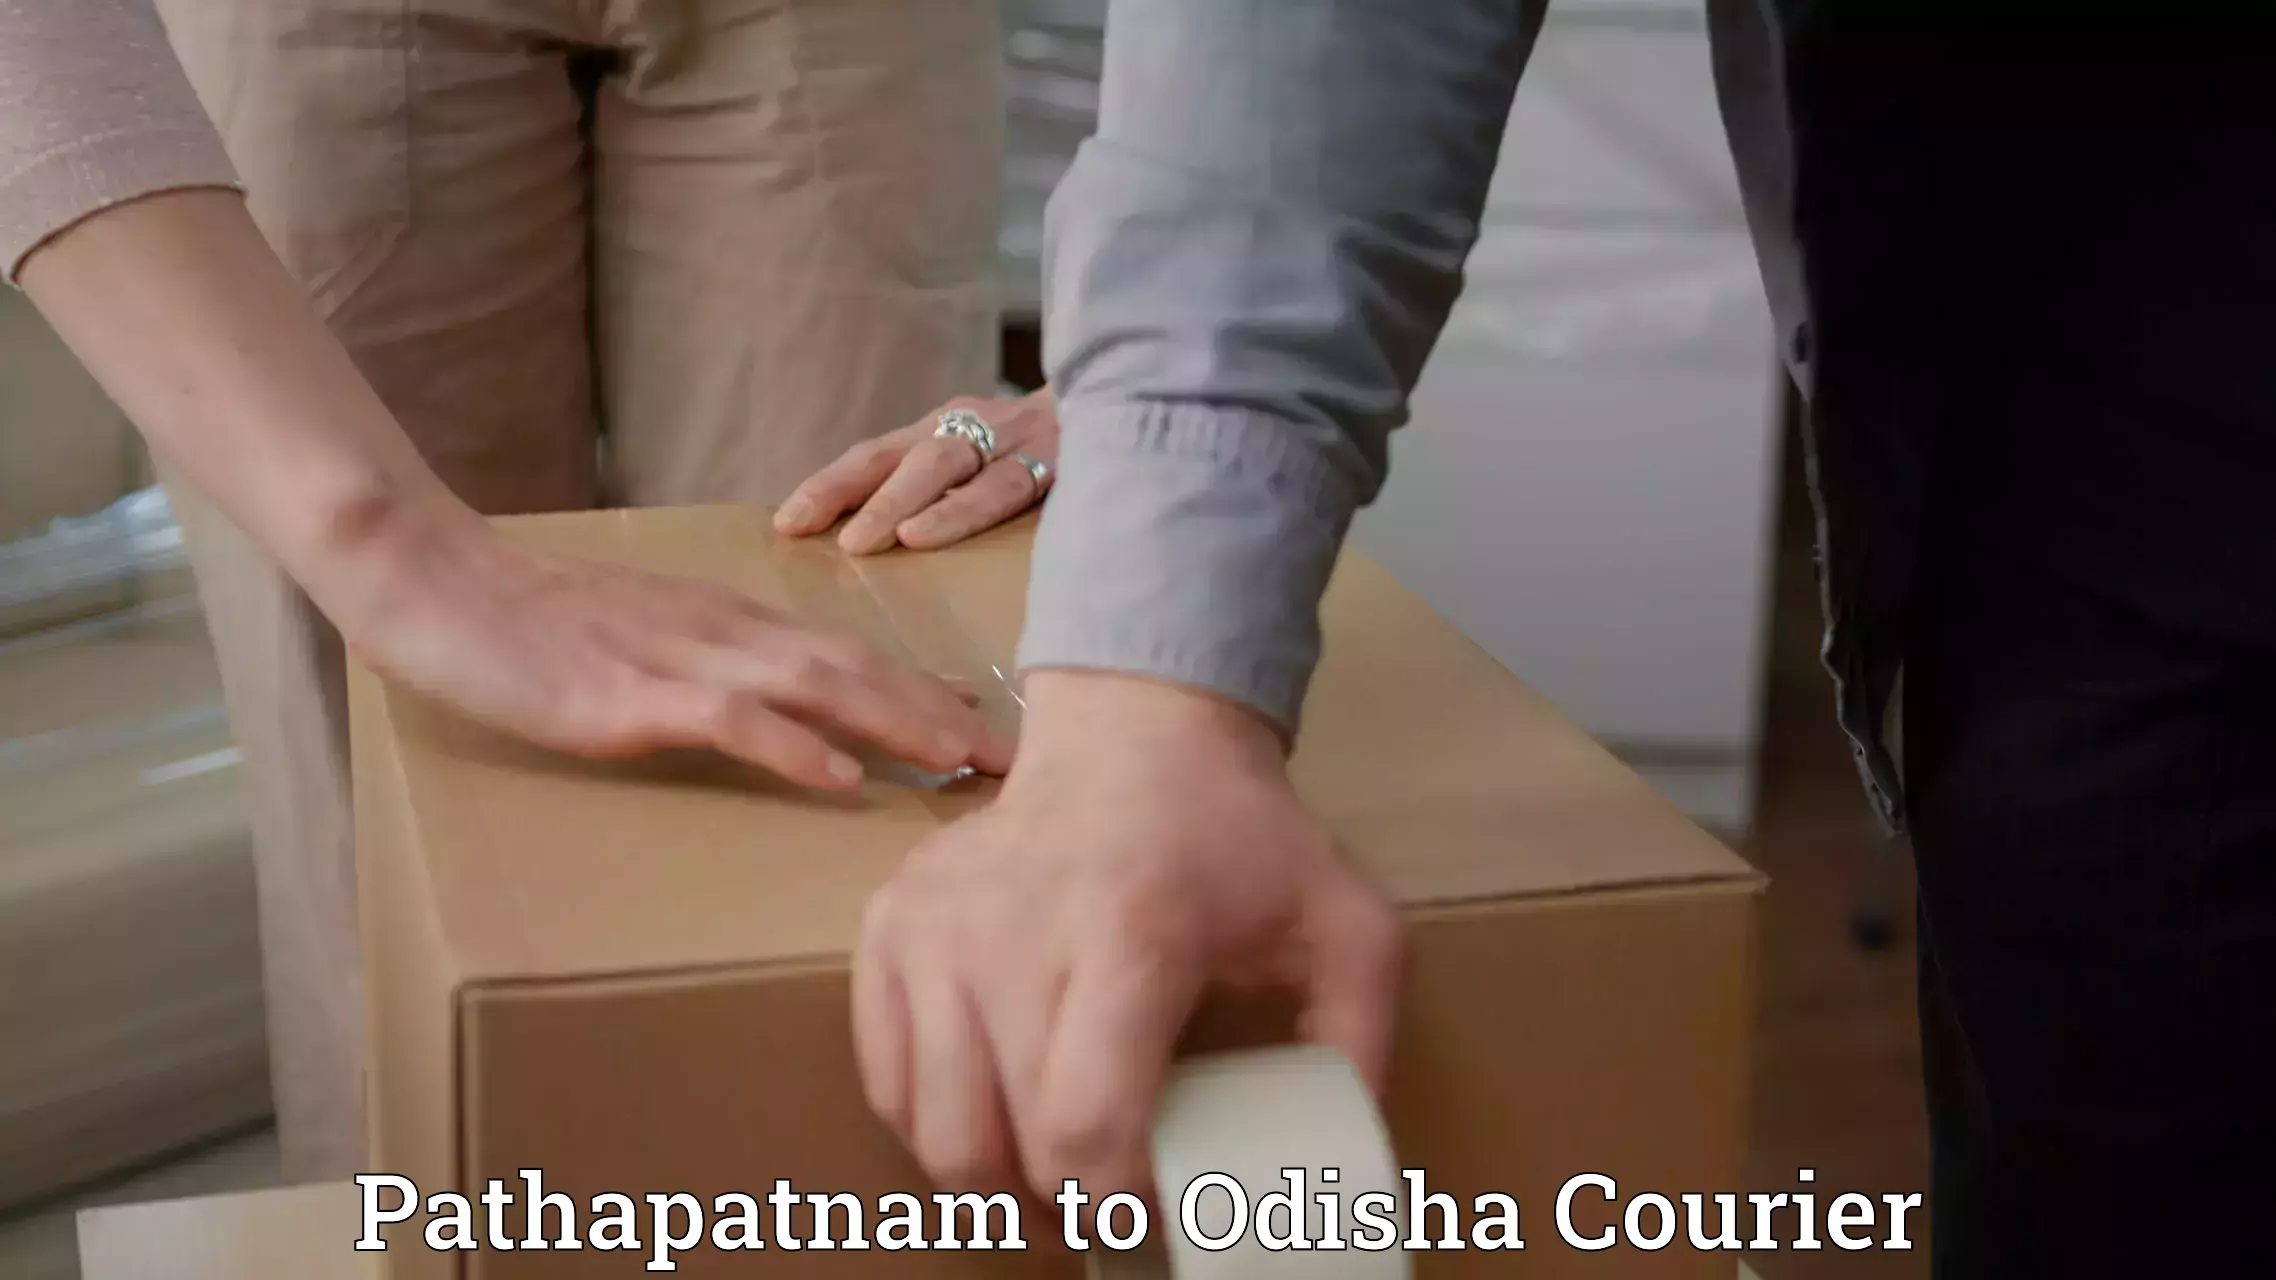 Global logistics network Pathapatnam to Odisha